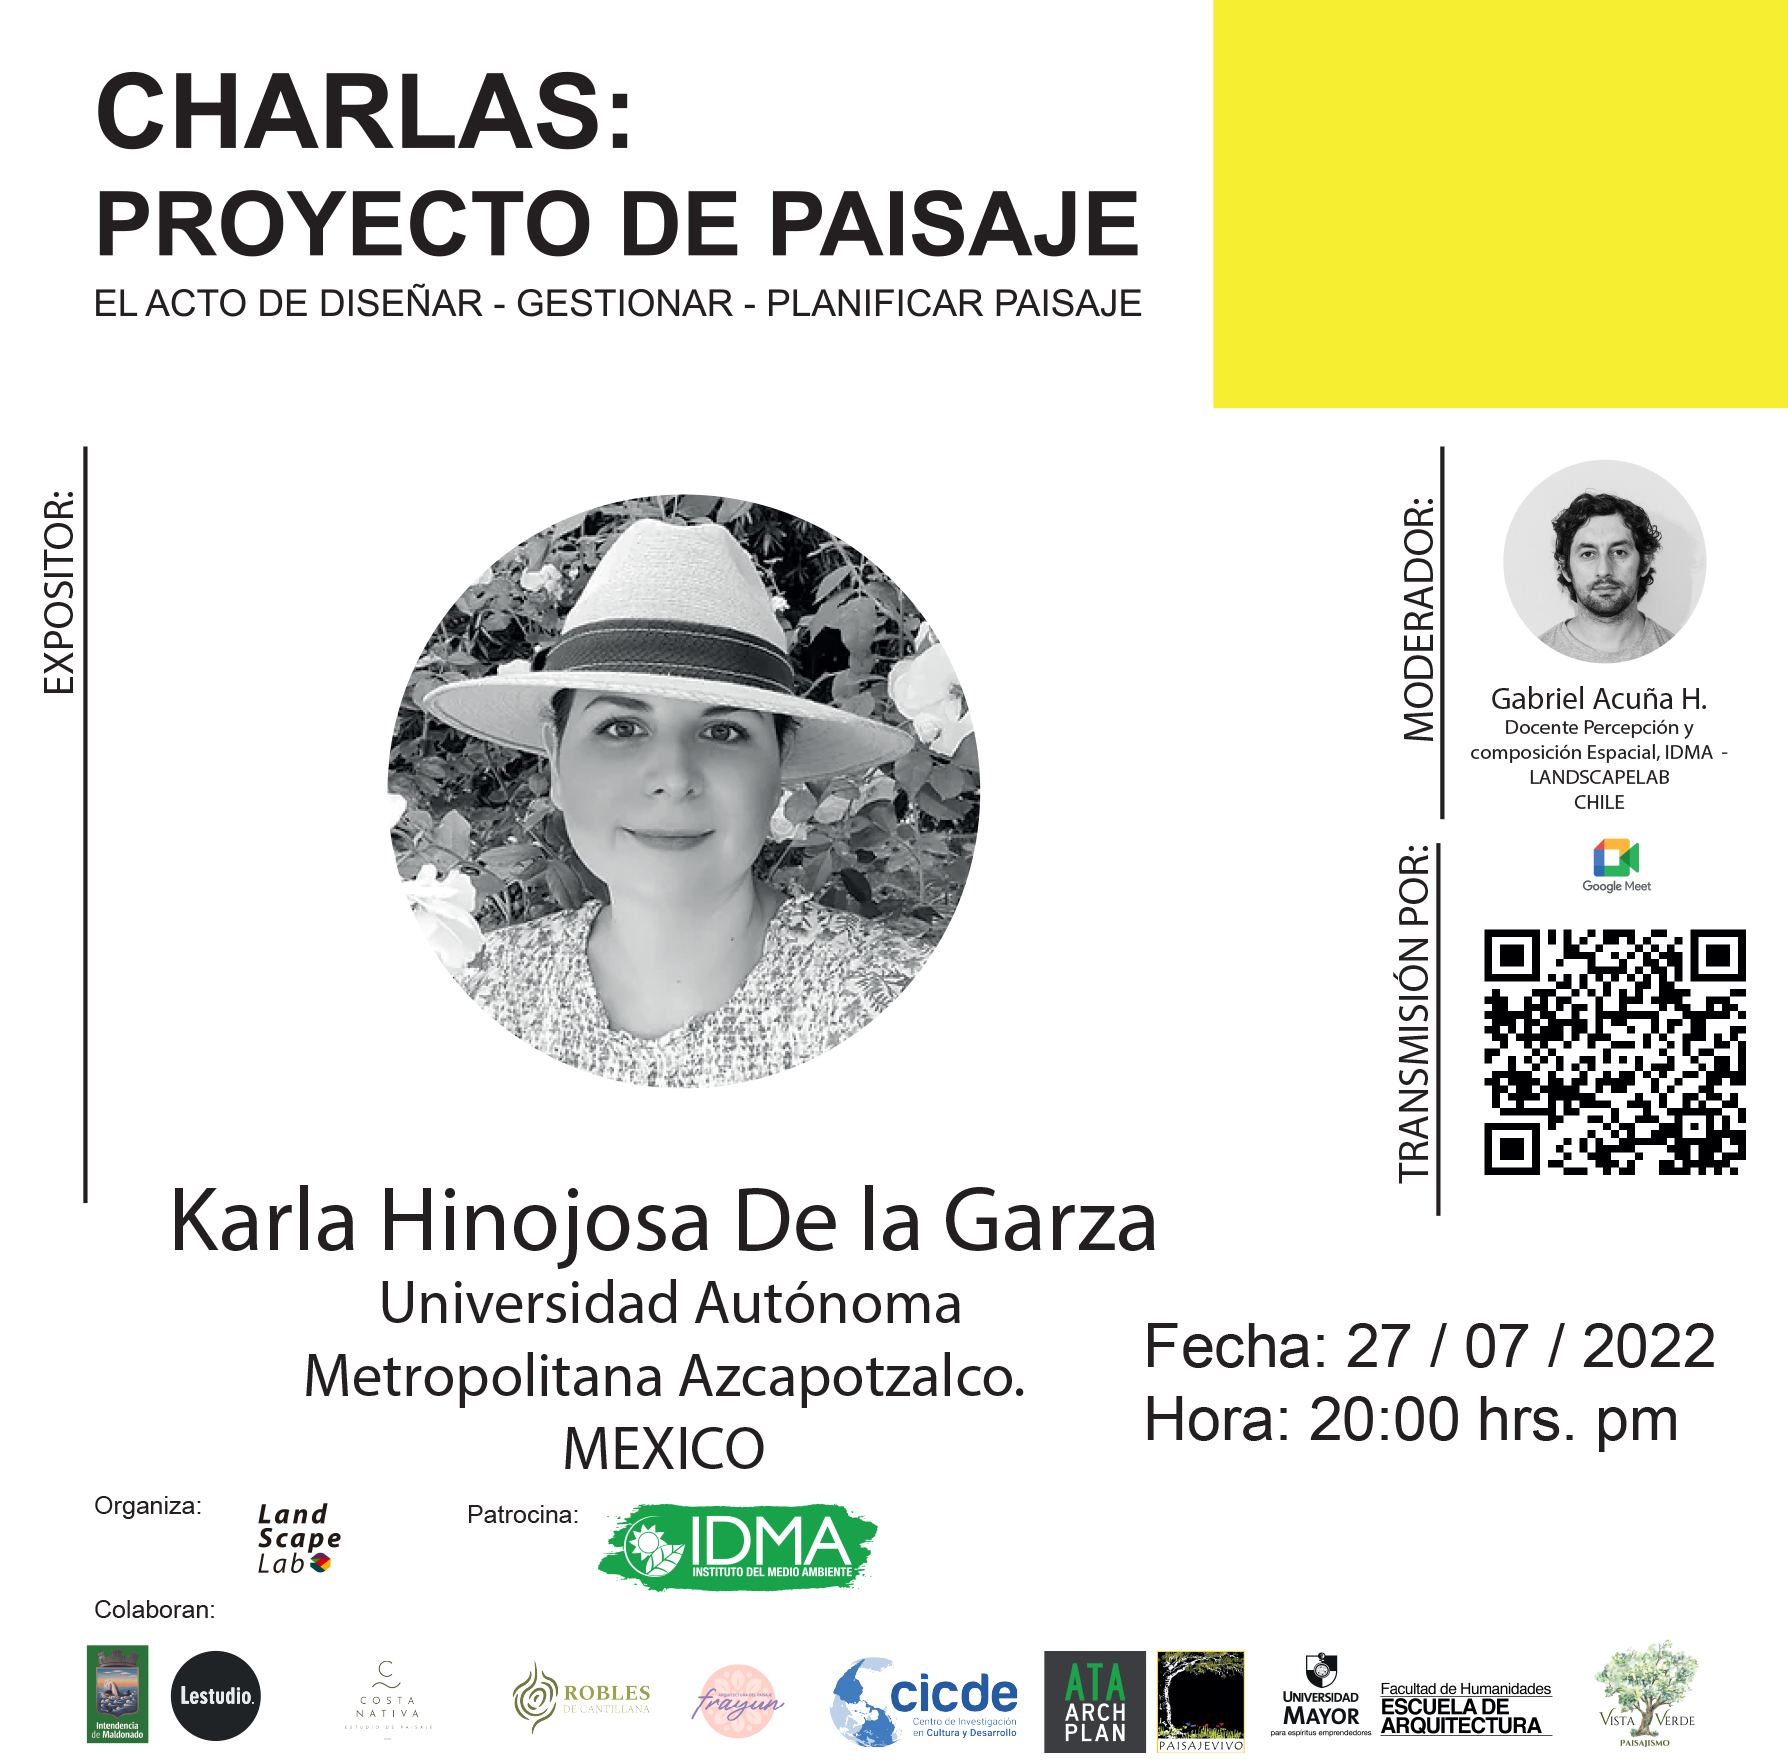 Charla Proyecto de Paisaje: Karla Hinojosa de la Garza